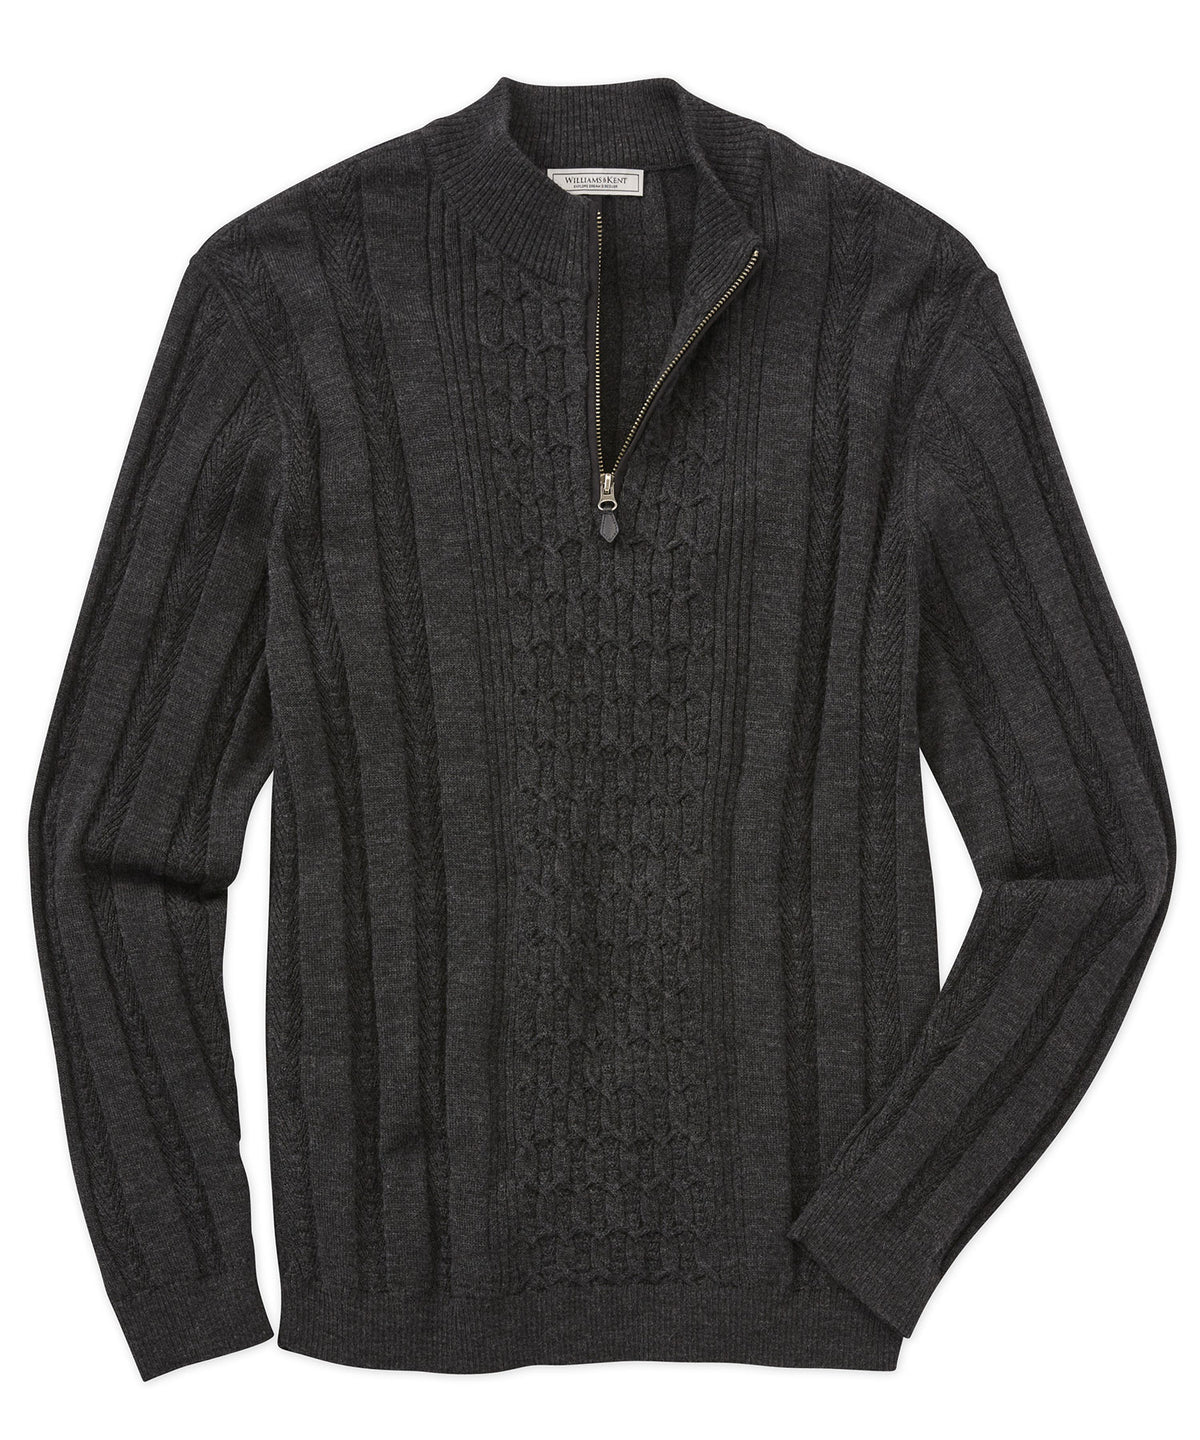 Herringbone Cable Knit Quarter-Zip Sweater